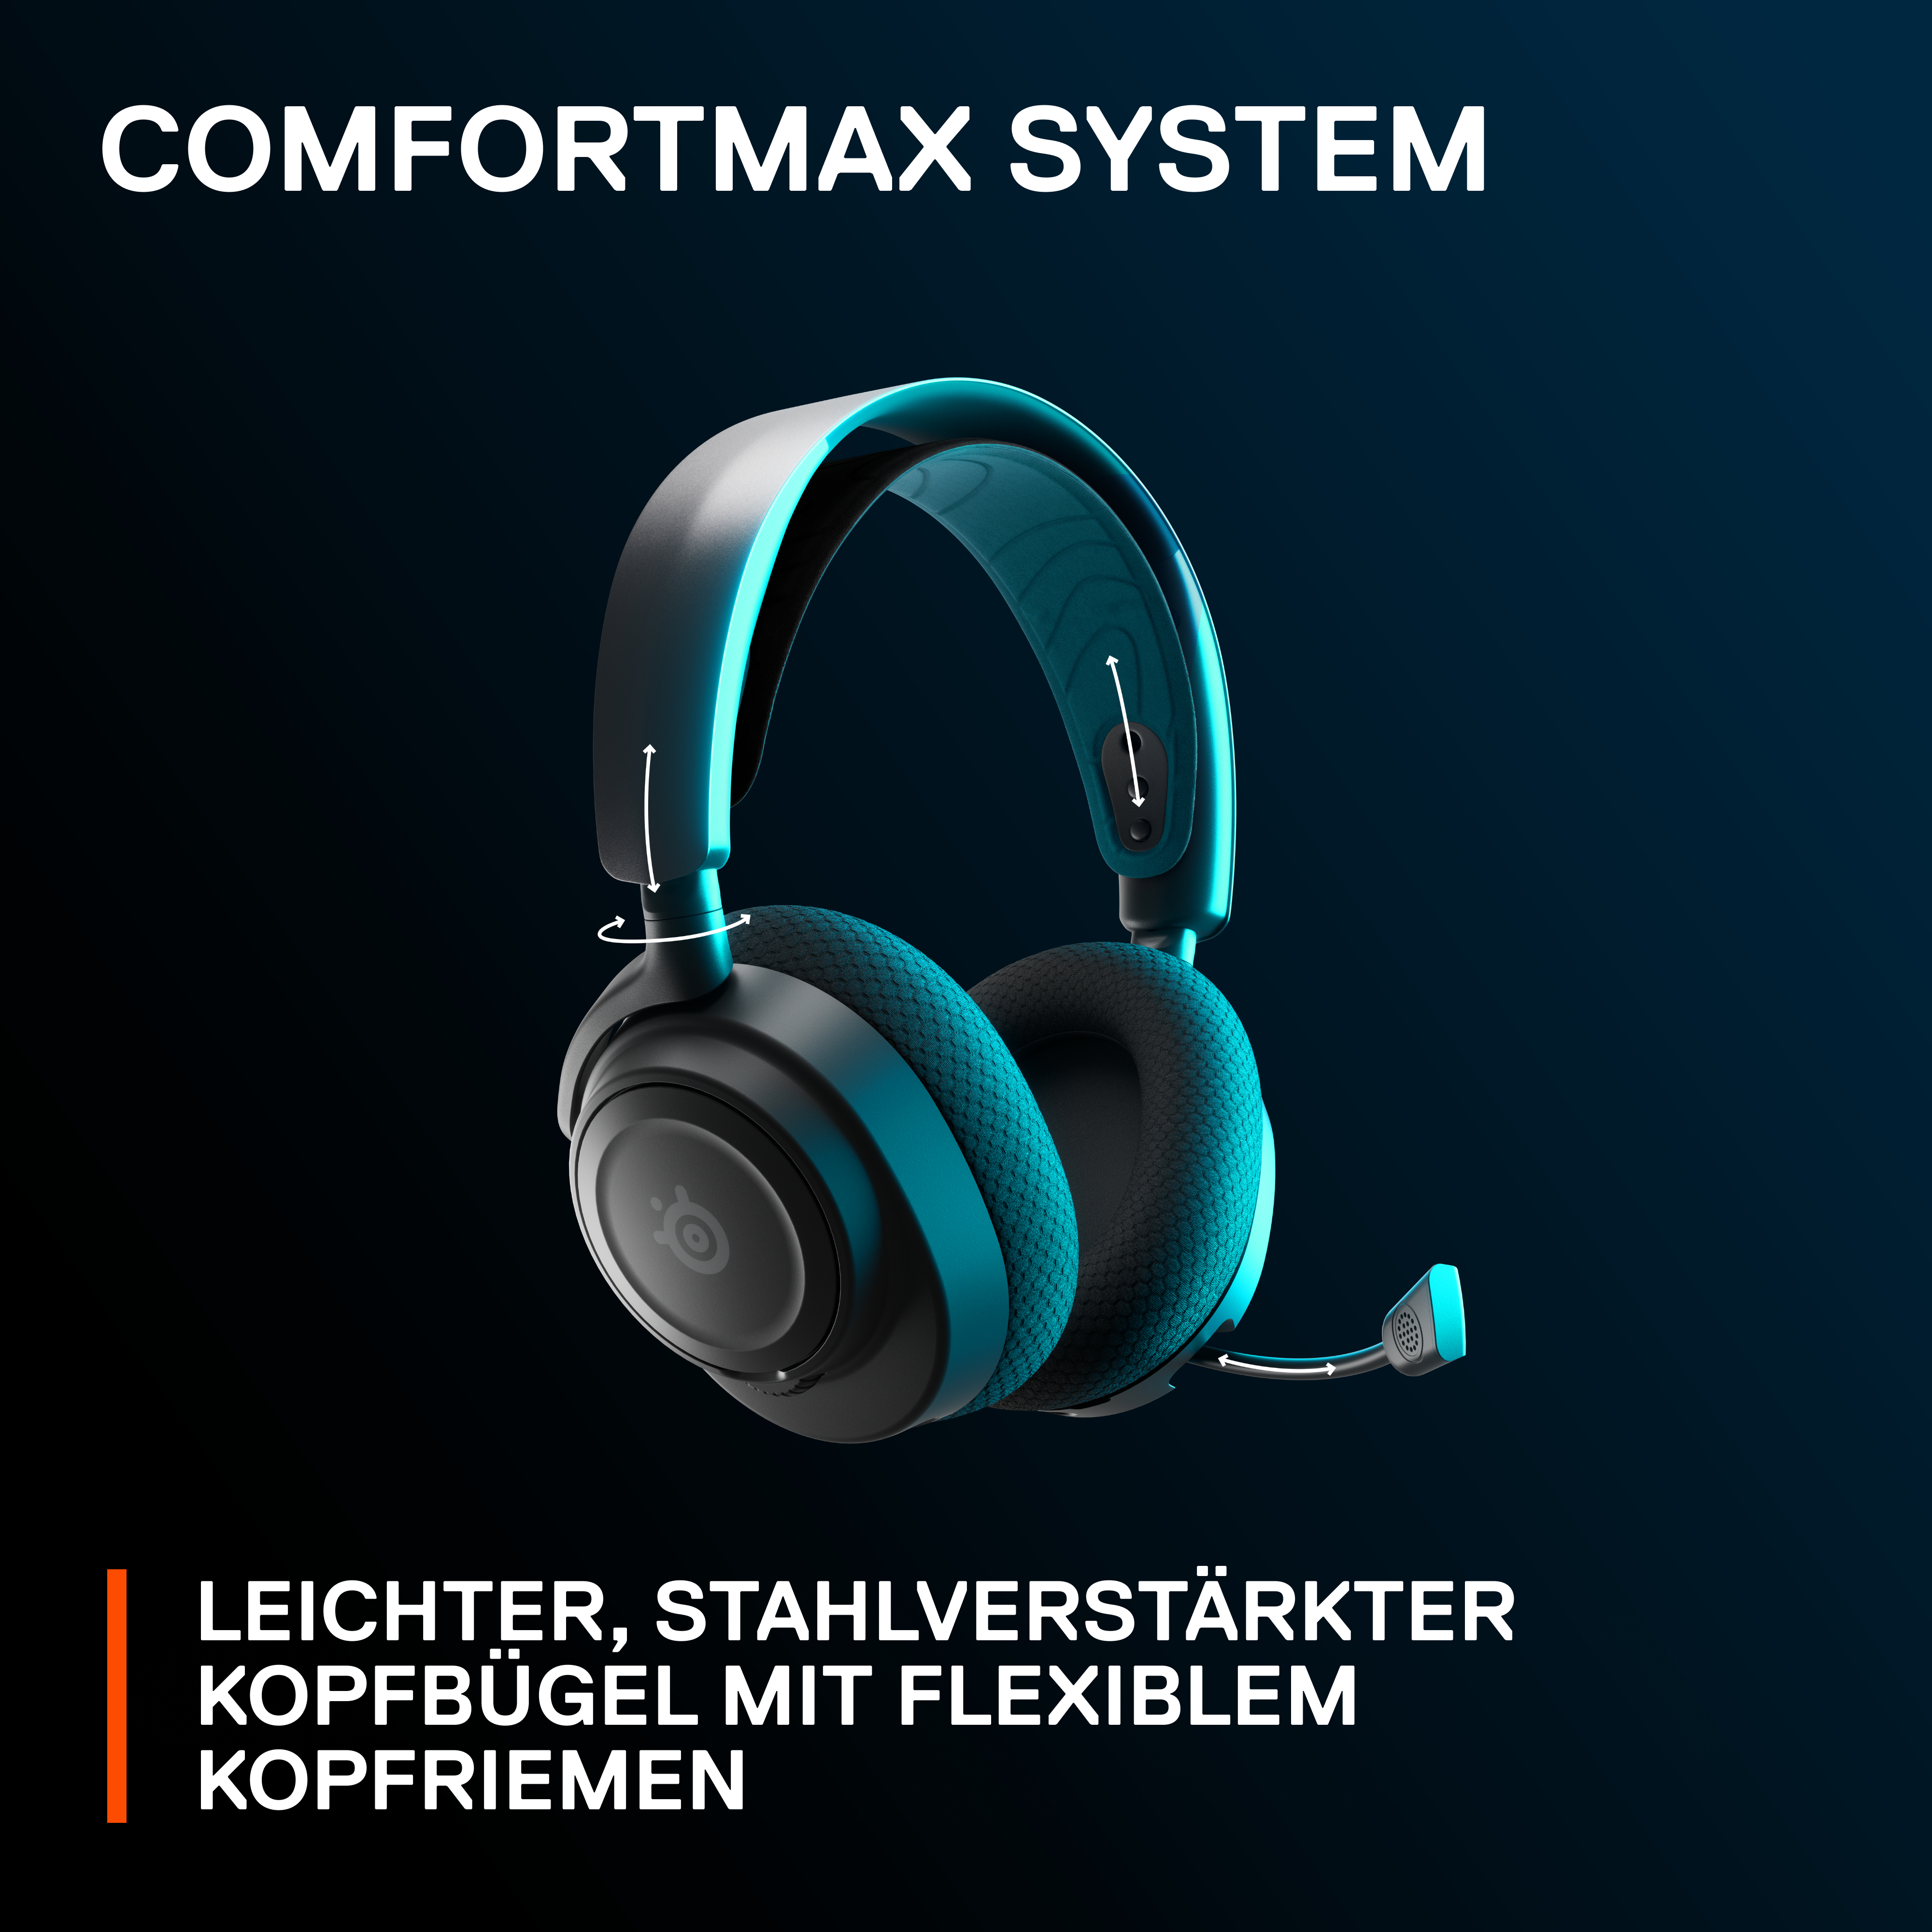 Nova Gaming Schwarz STEELSERIES 7P, Over-ear Arctis Bluetooth Headset